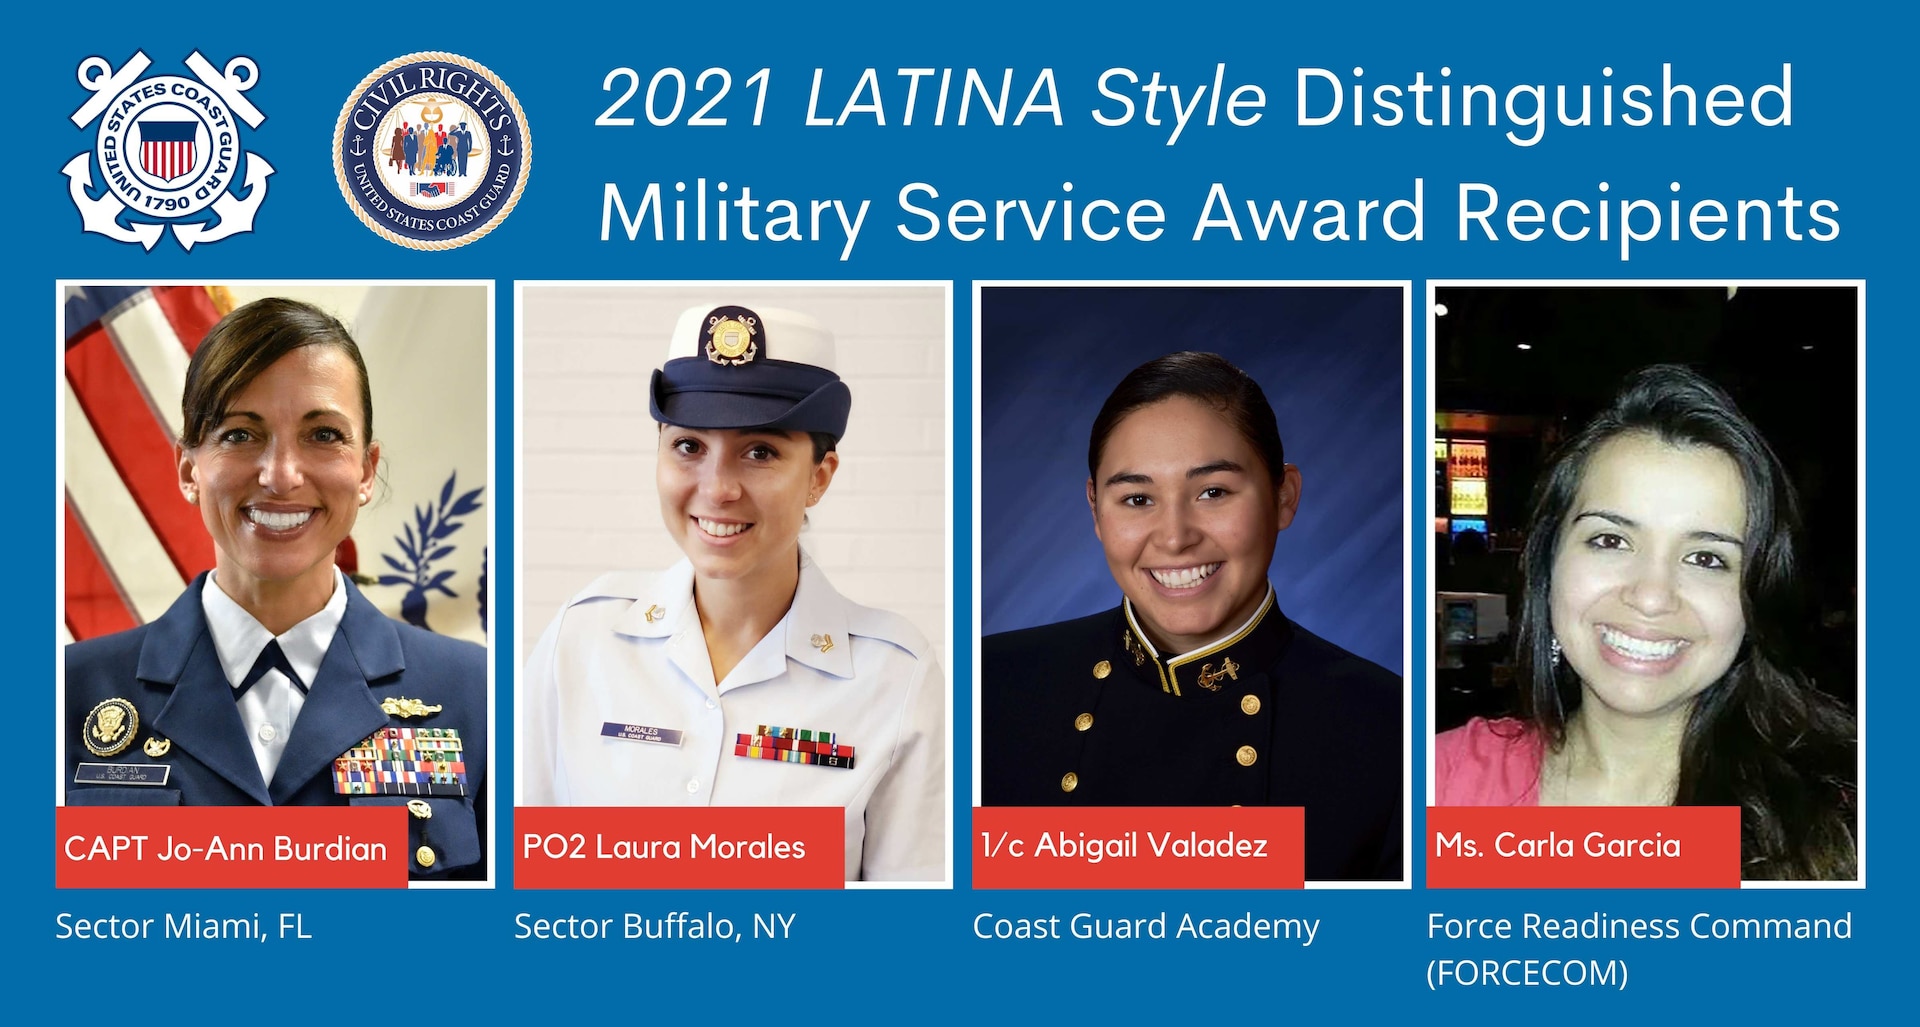 2021 LATINA Style Distinguished Military Service Award recipients